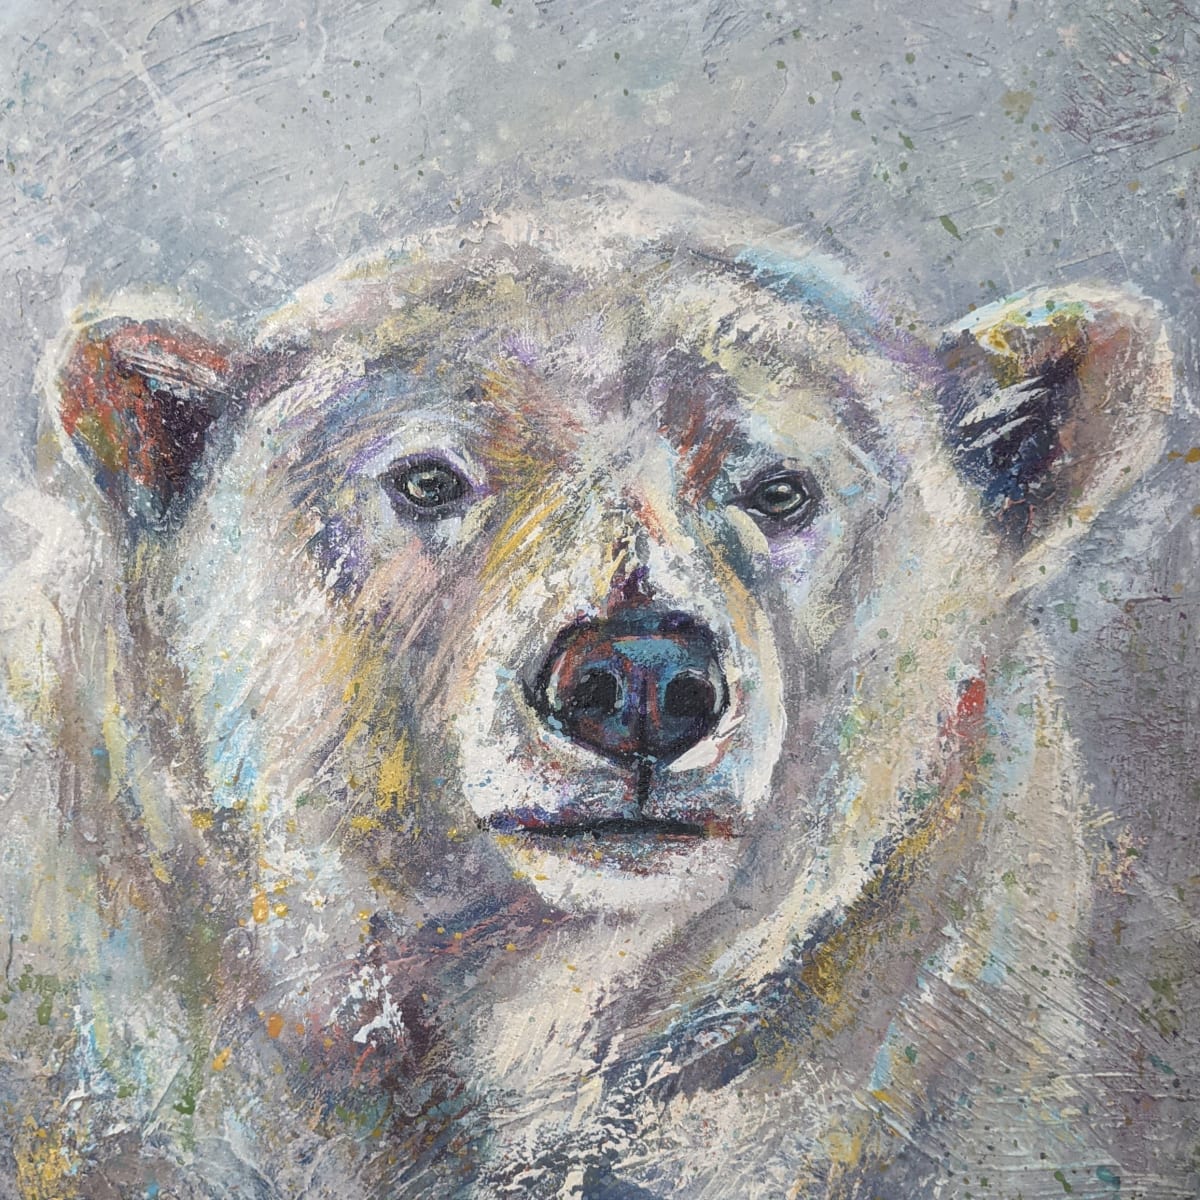 Ursus Maritimus (Polar Bear) by Bethany Aiken  Image: Ursus Maritimus (Polar Bear)
BEAR WITH ME Series - 3 of 3